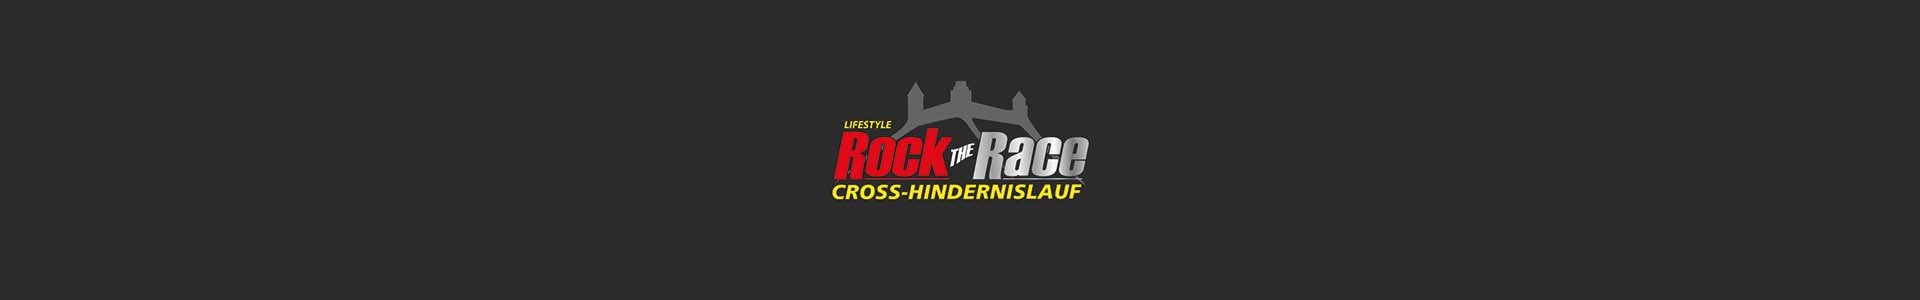 Rock the Race Logo